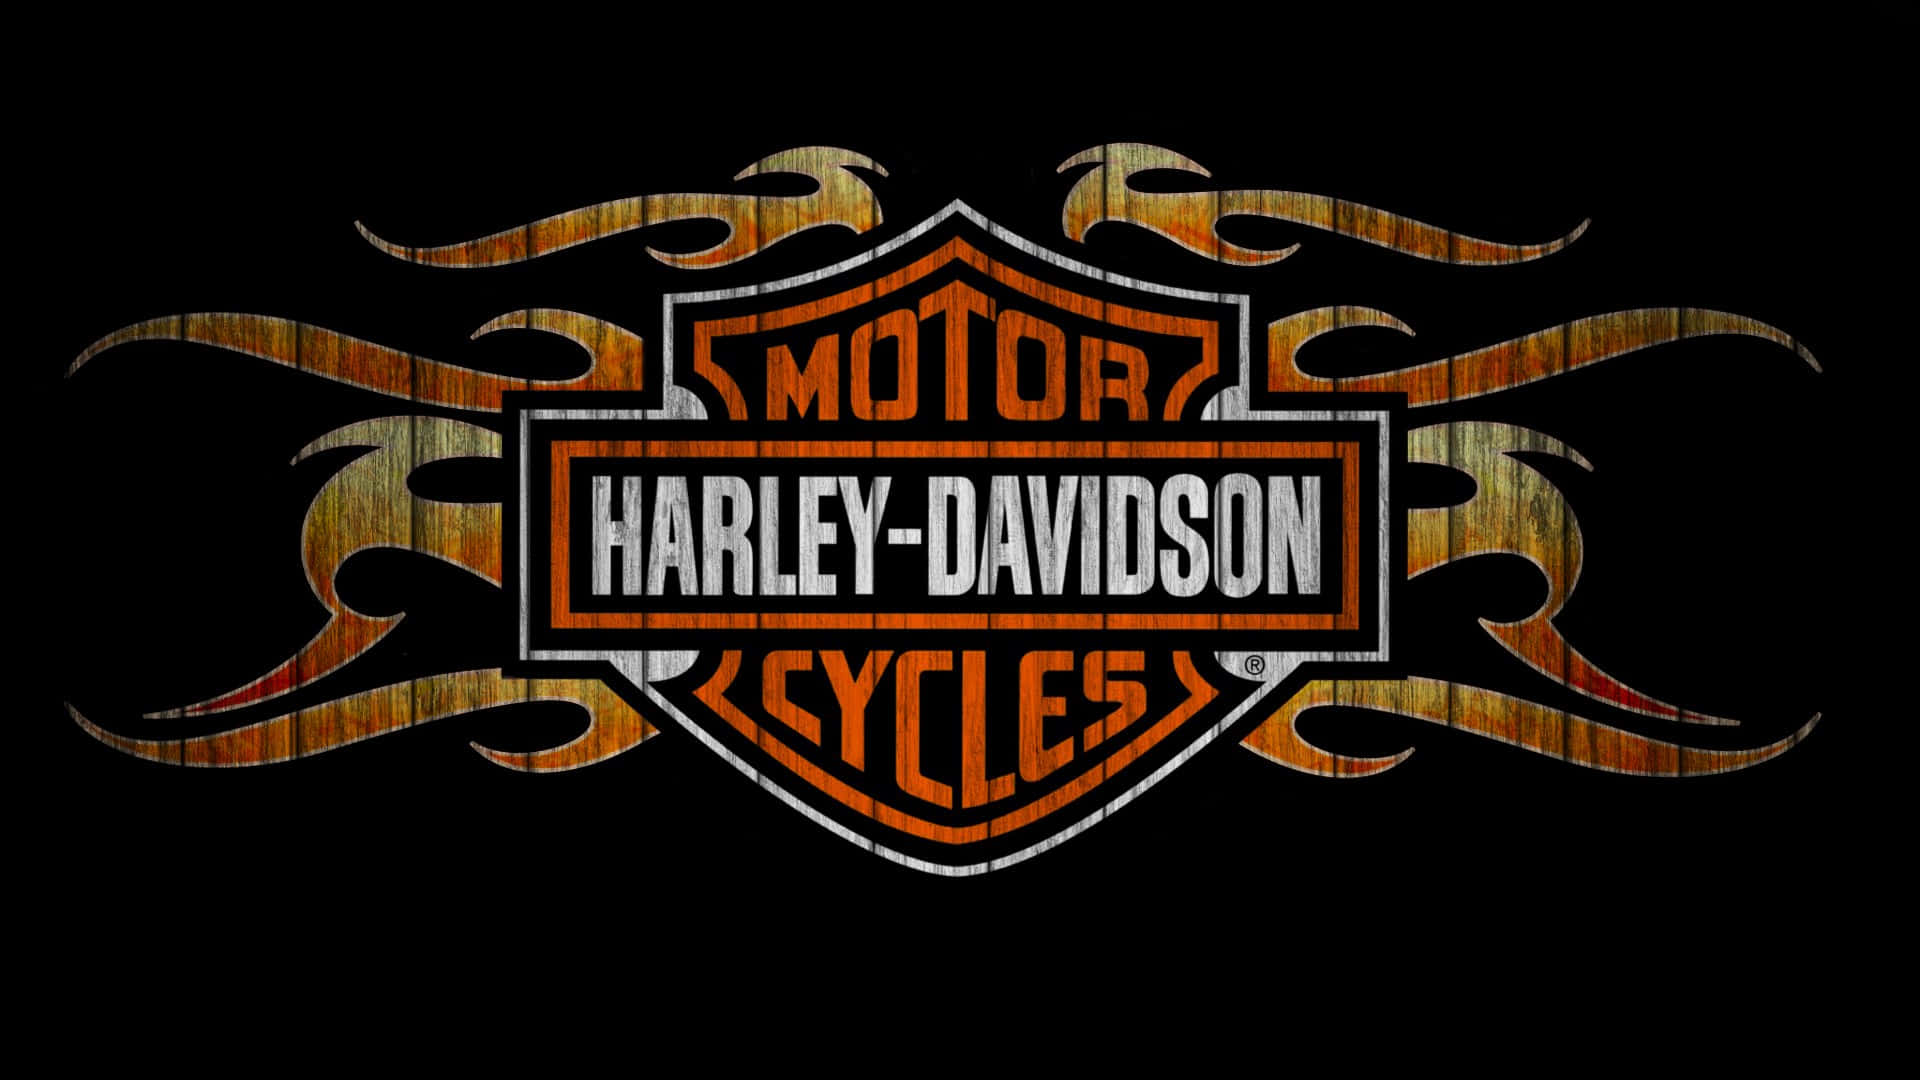 Fundode Tela Com O Logotipo Da Marca De Motos Harley Davidson